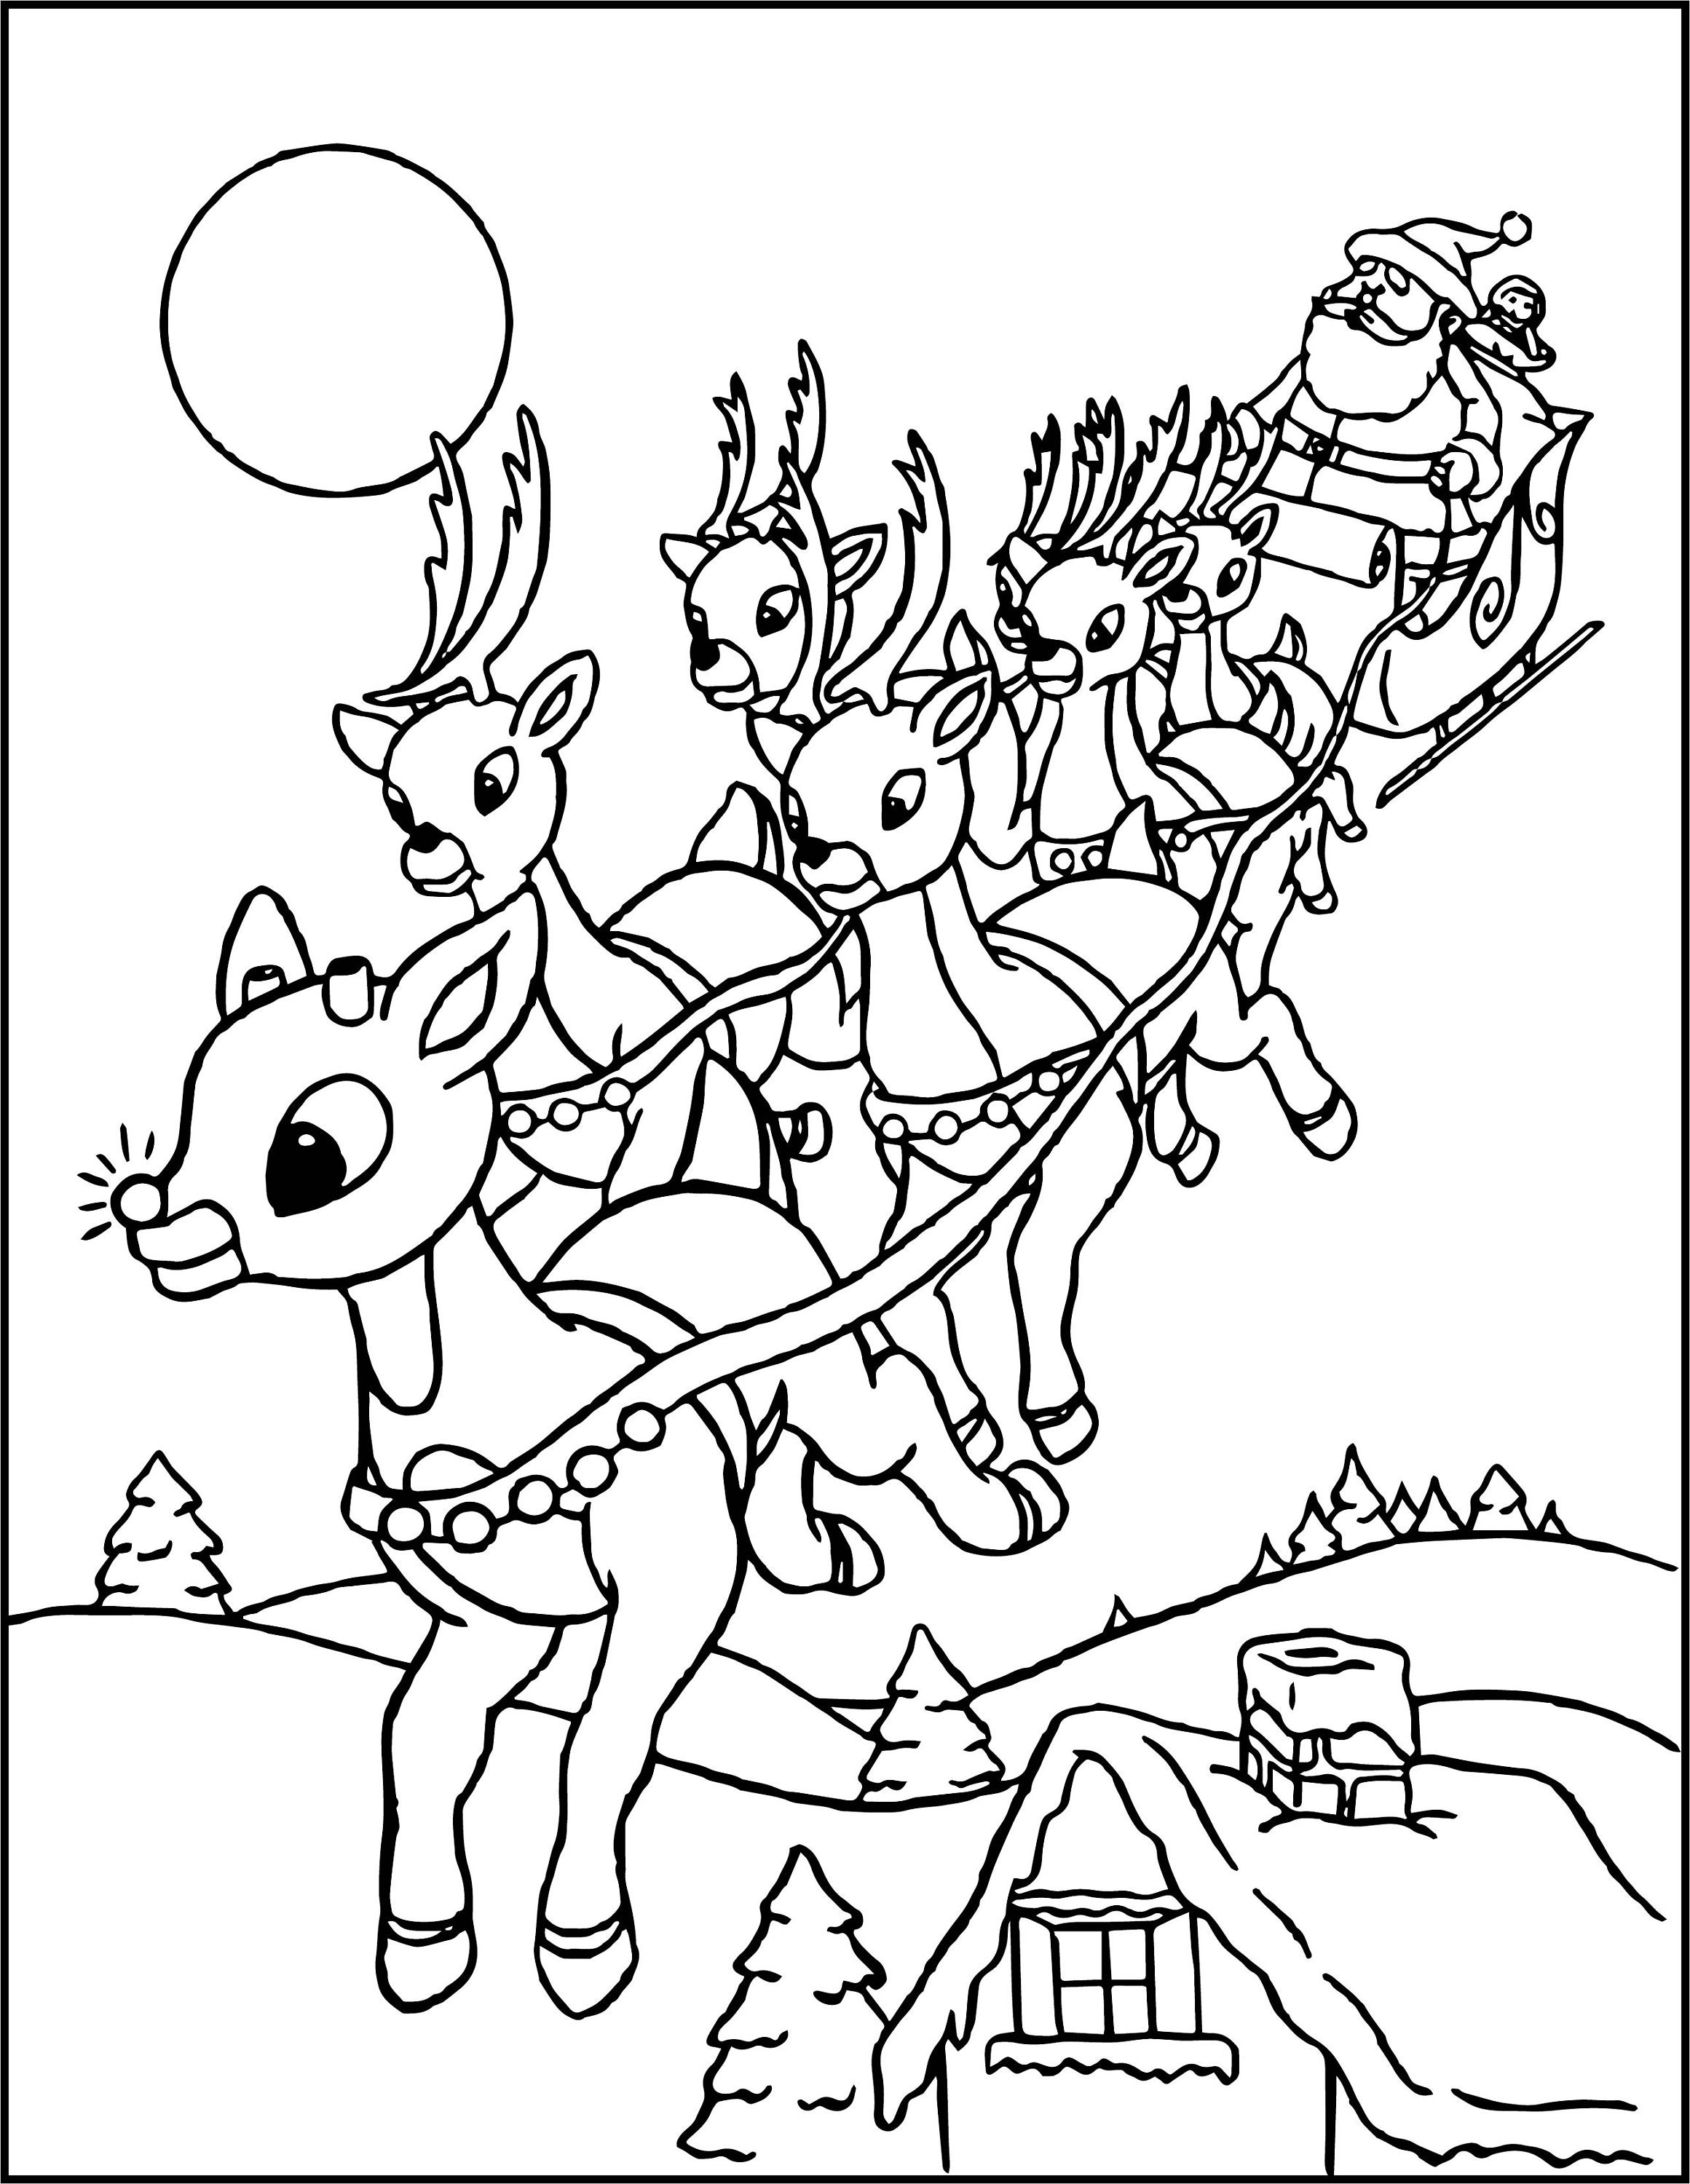 Santa and his sleigh digital printable coloring page